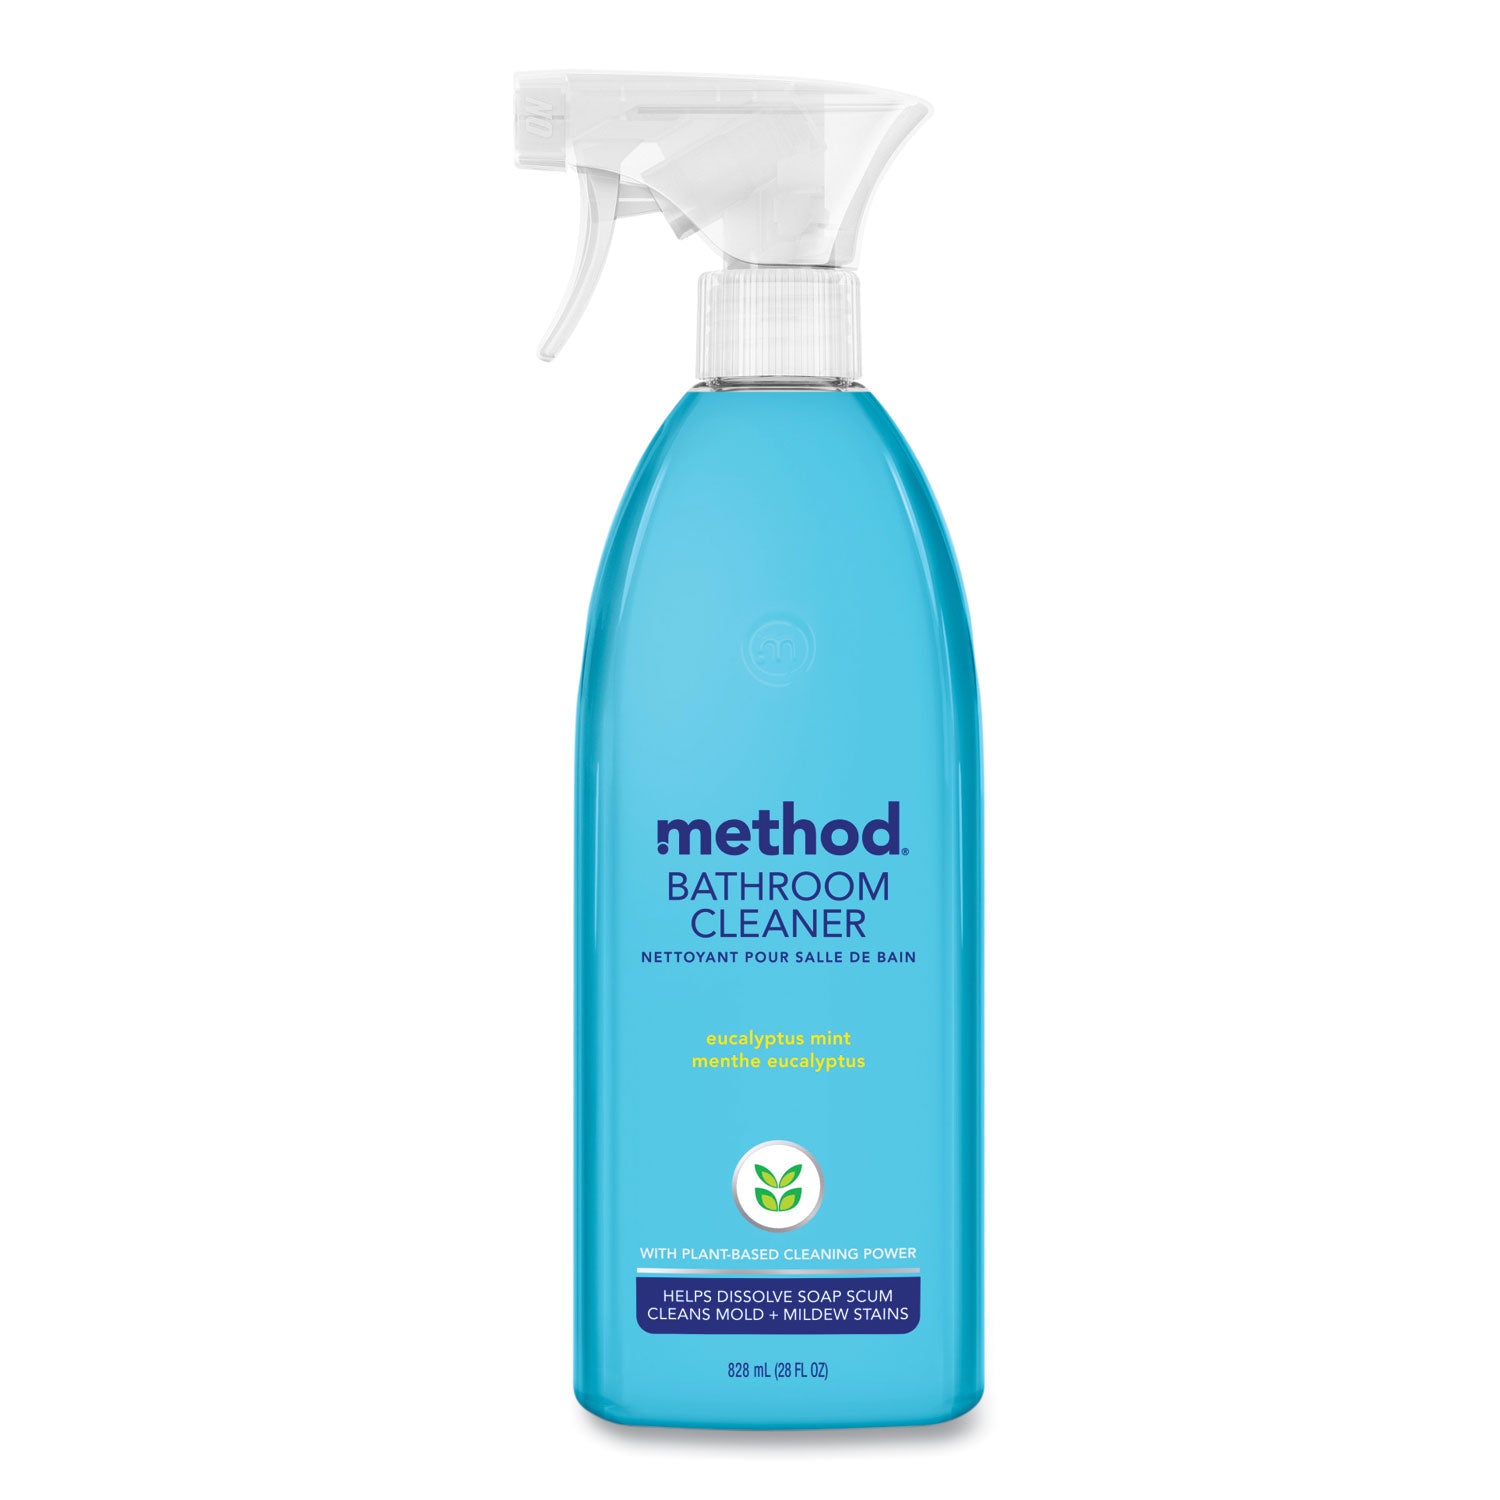 Method Daily Shower Spray Cleaner - 28 fl oz (0.9 quart) - Eucalyptus Mint Scent - 8 / Carton - Pleasant Scent, Non-toxic, Disinfectant - Blue - 1